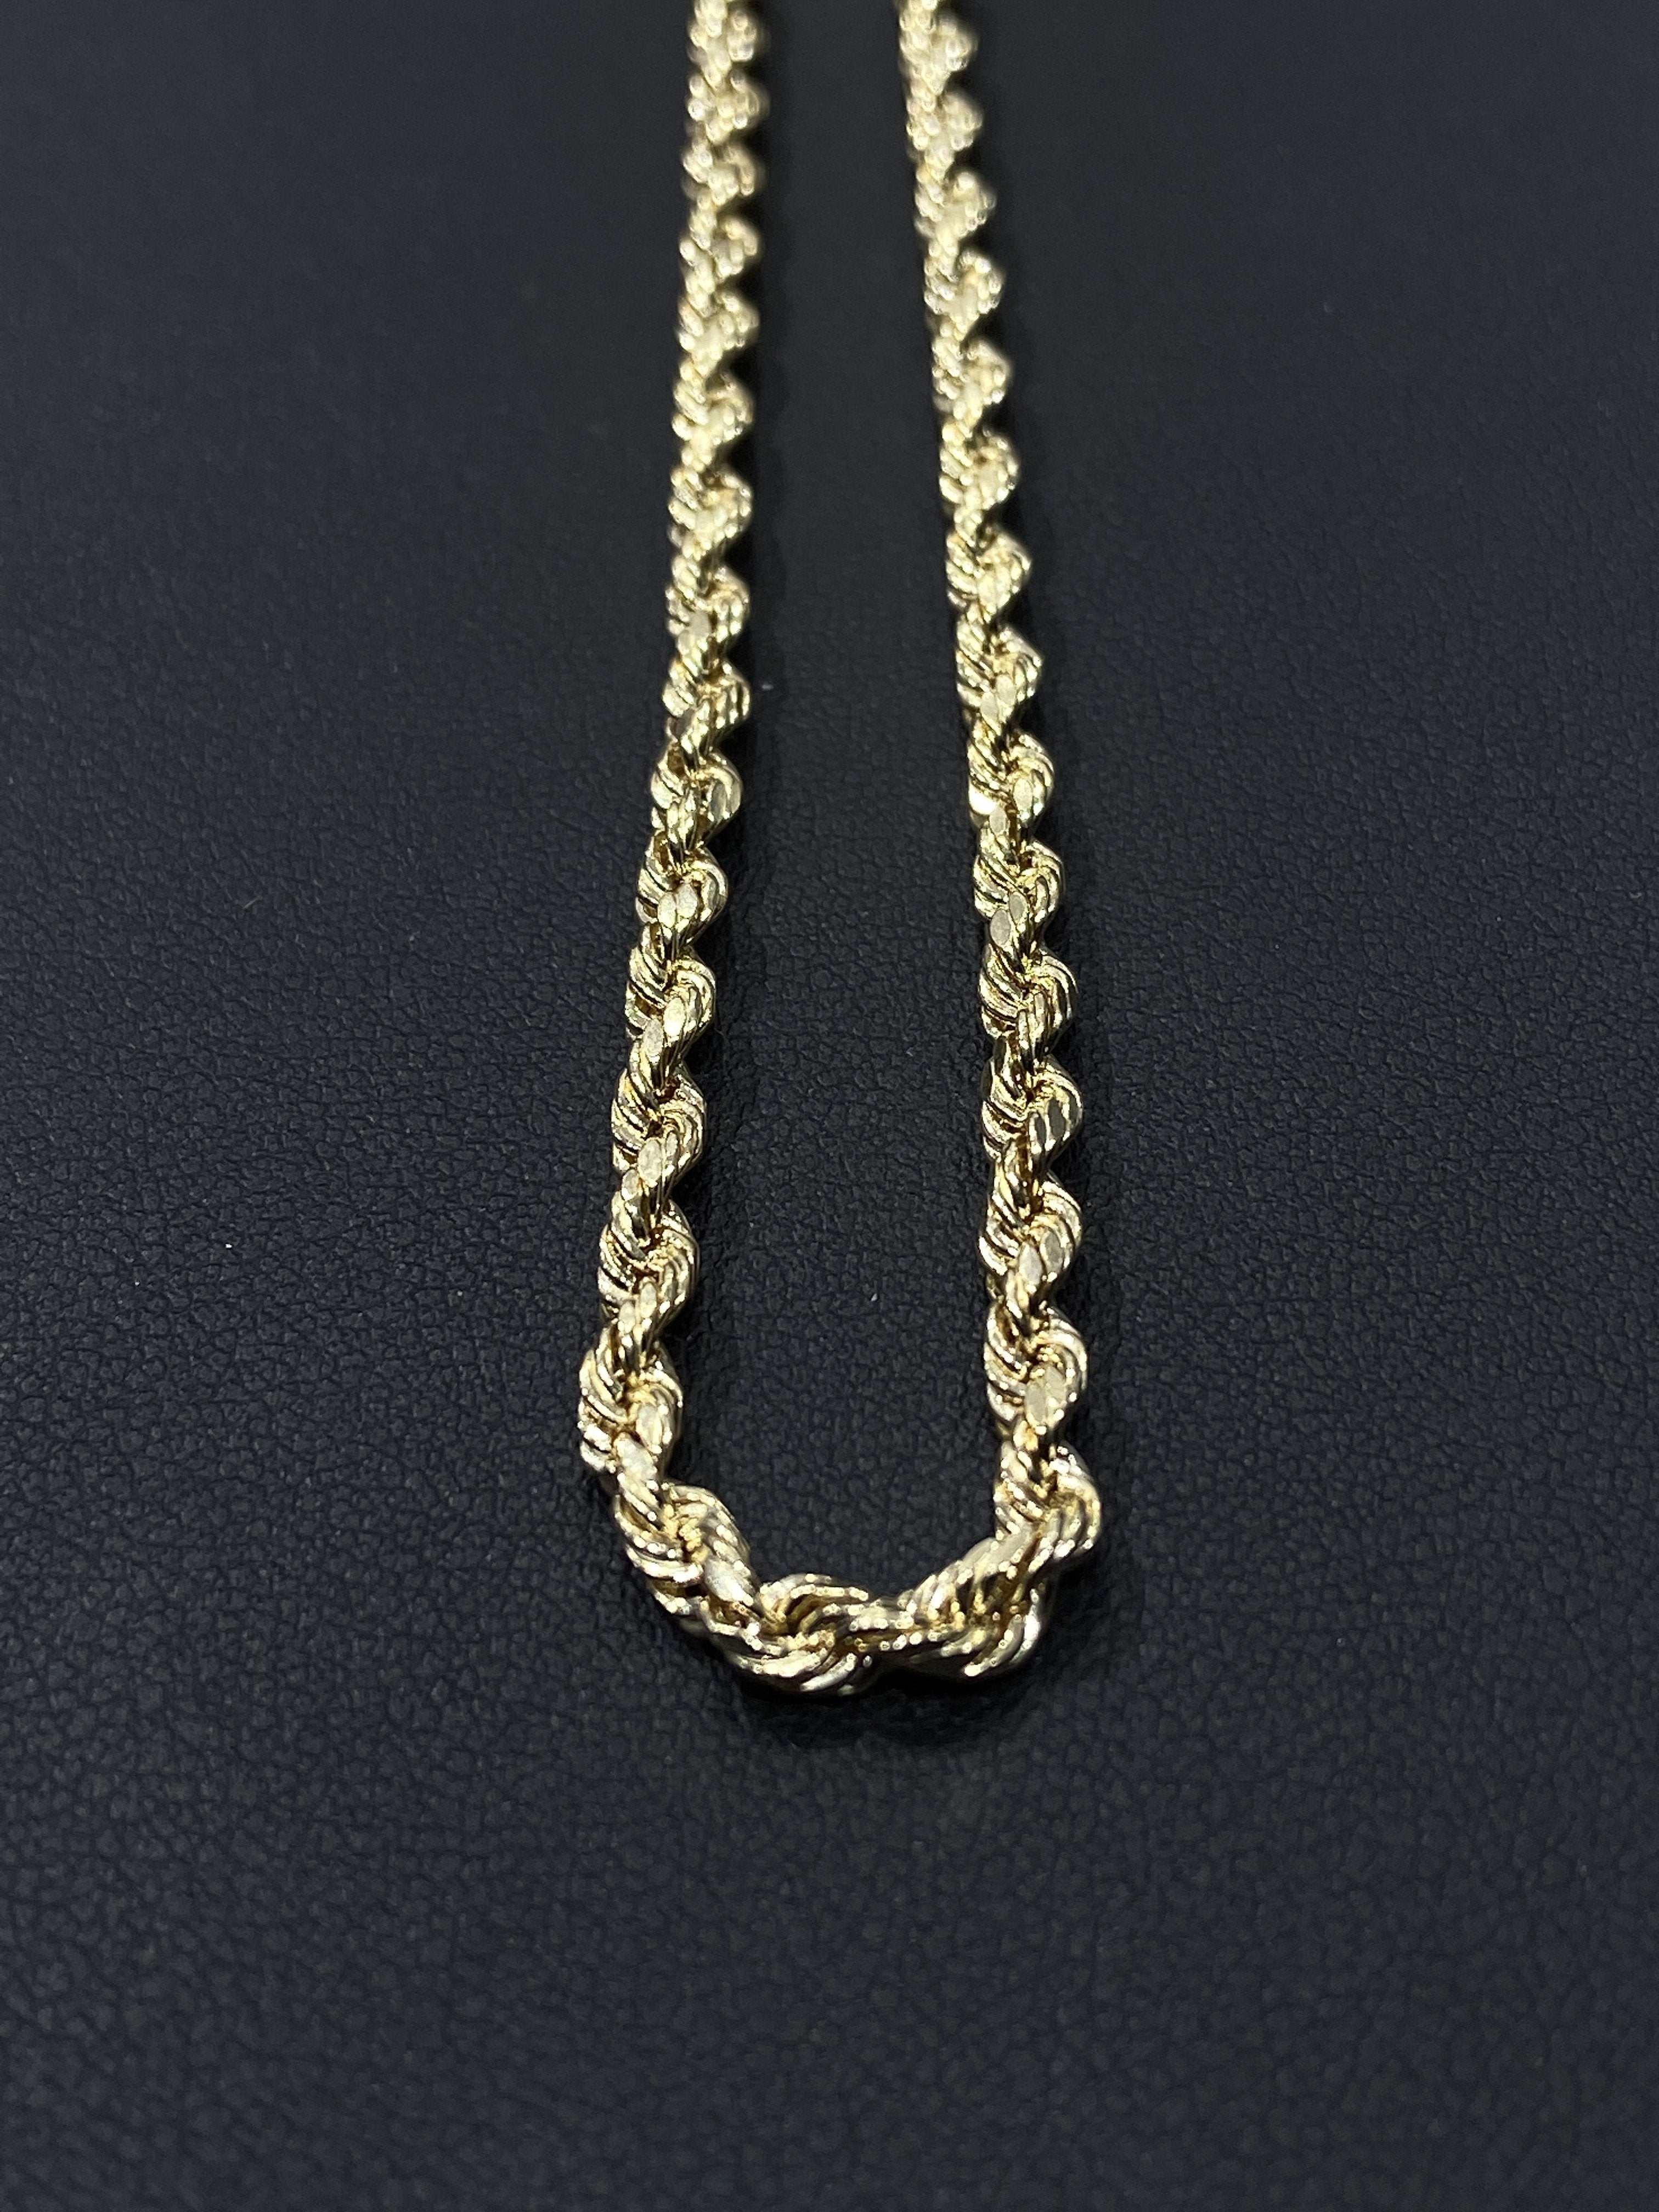 Gold Rope Chain 14K (Regular) - 6mm – White Carat - USA & Canada